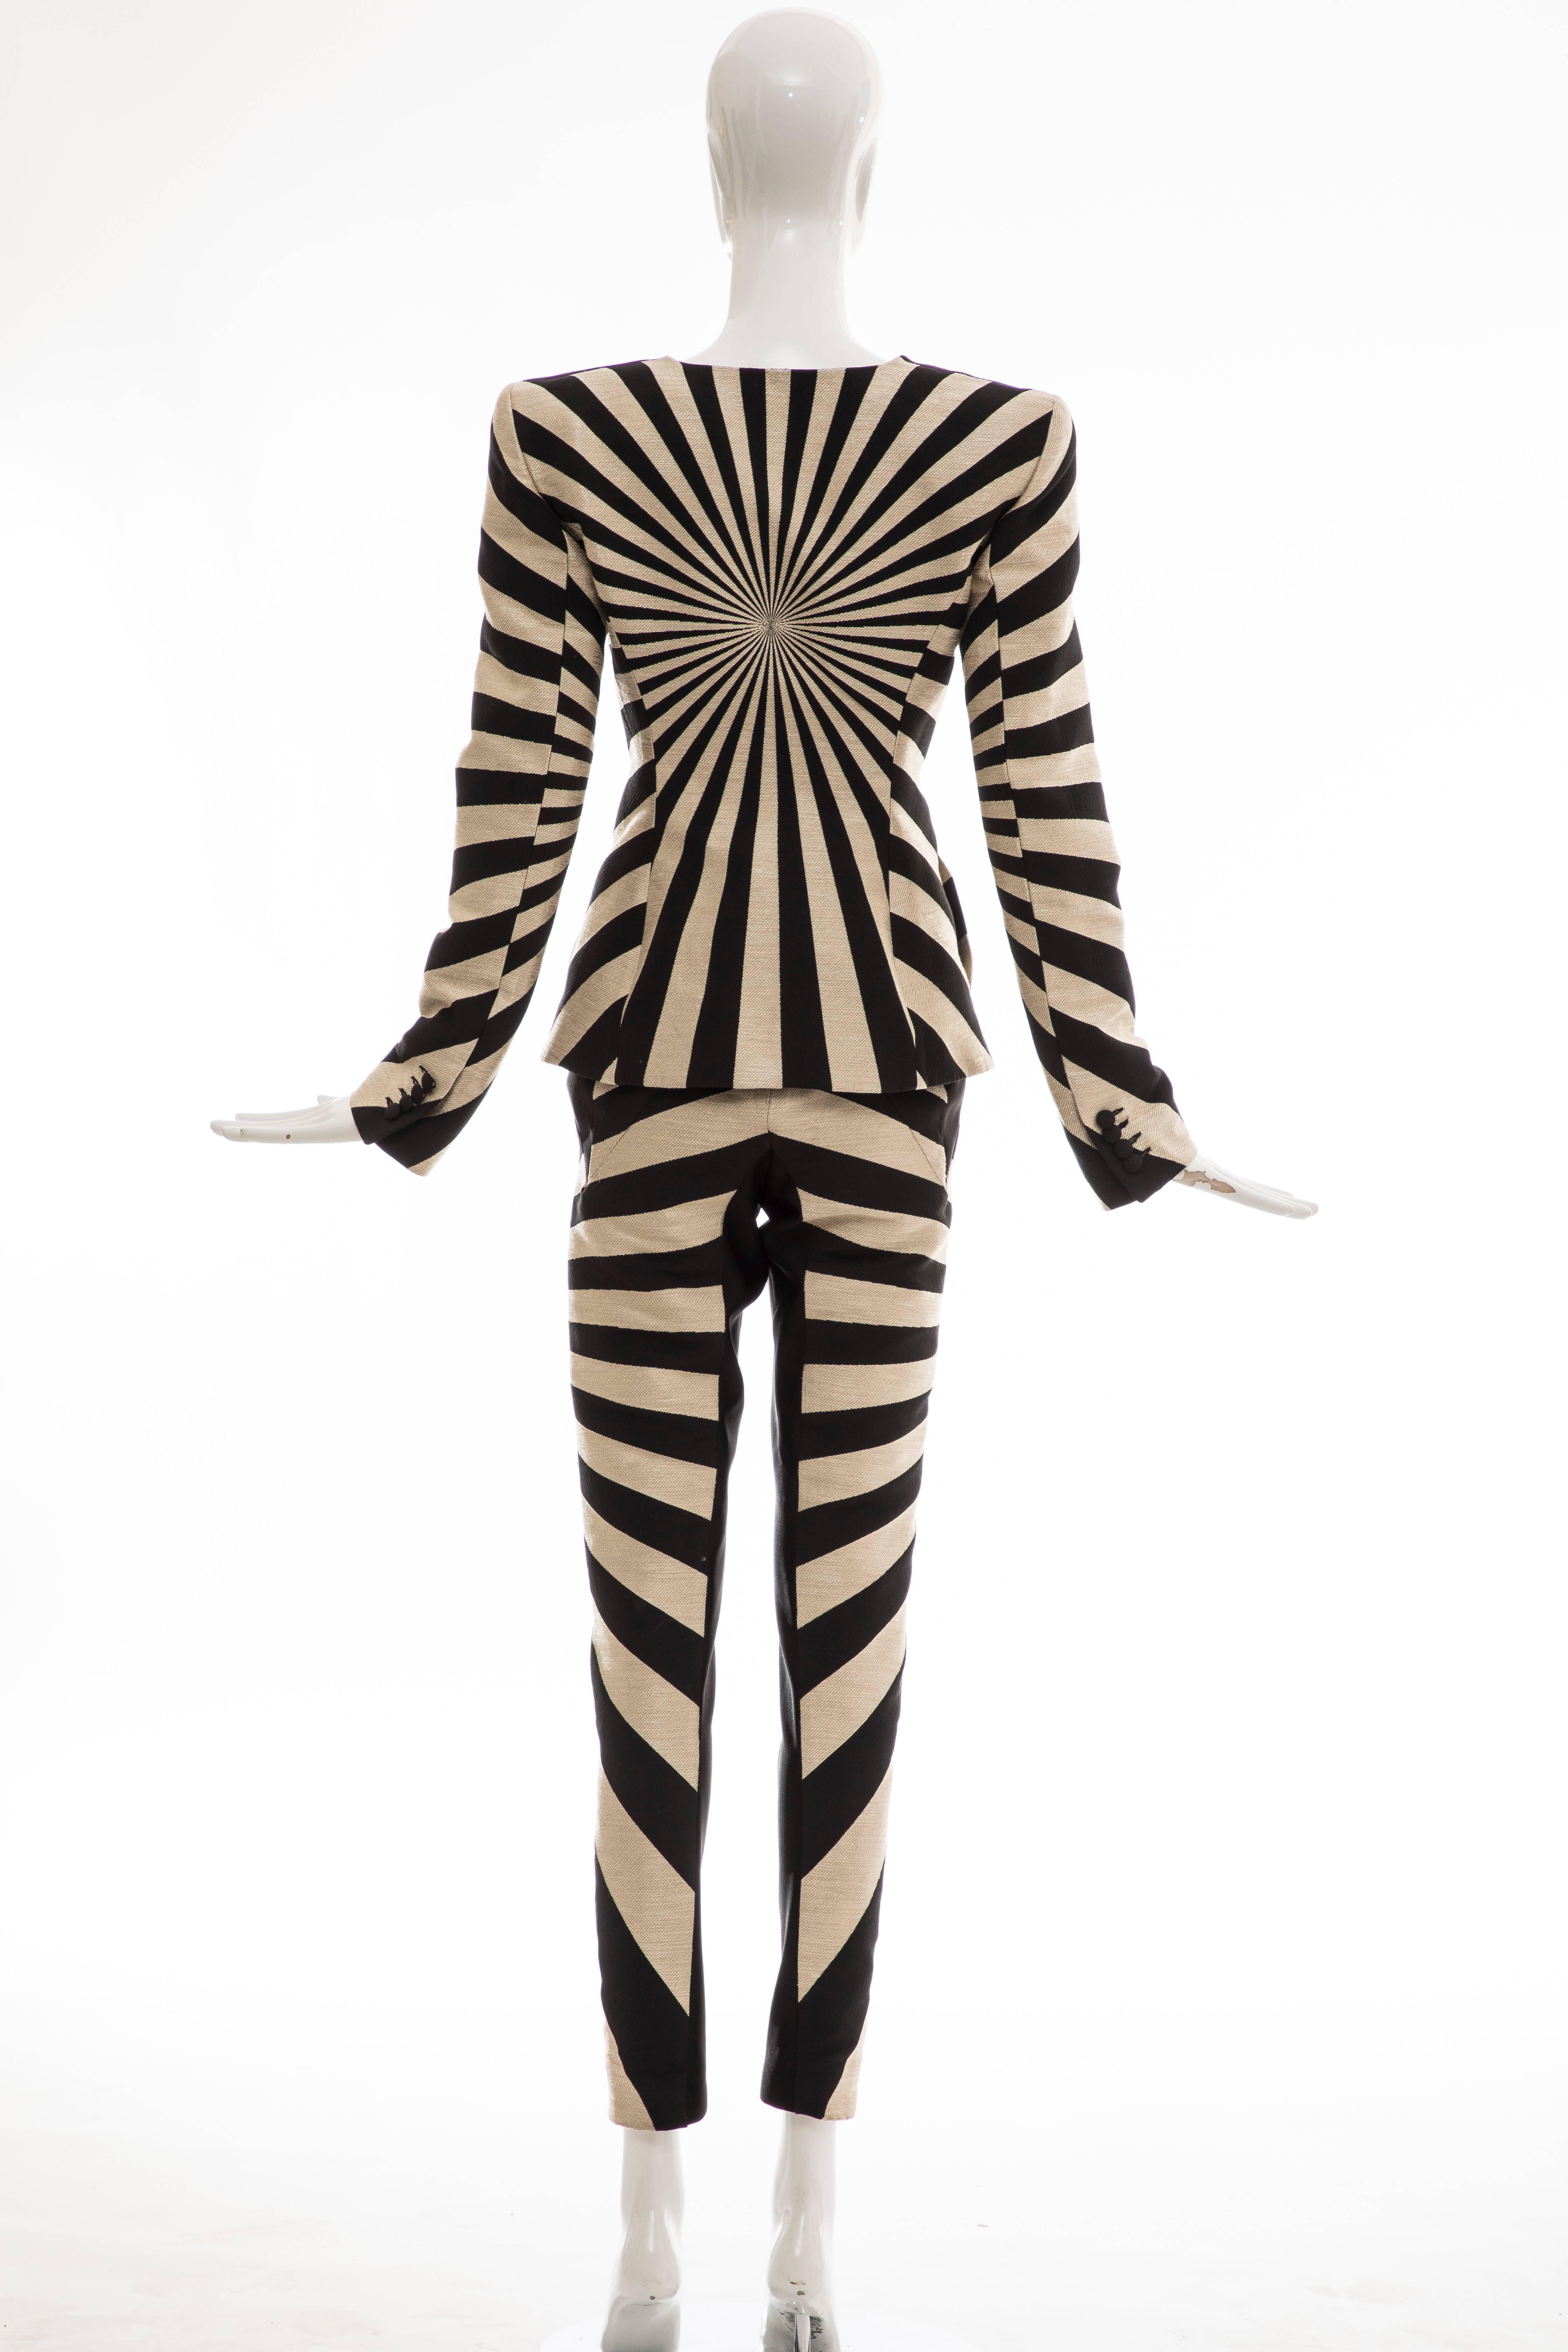 Black Gareth Pugh Woven Striped Pattern Pantsuit, Spring 2017 For Sale